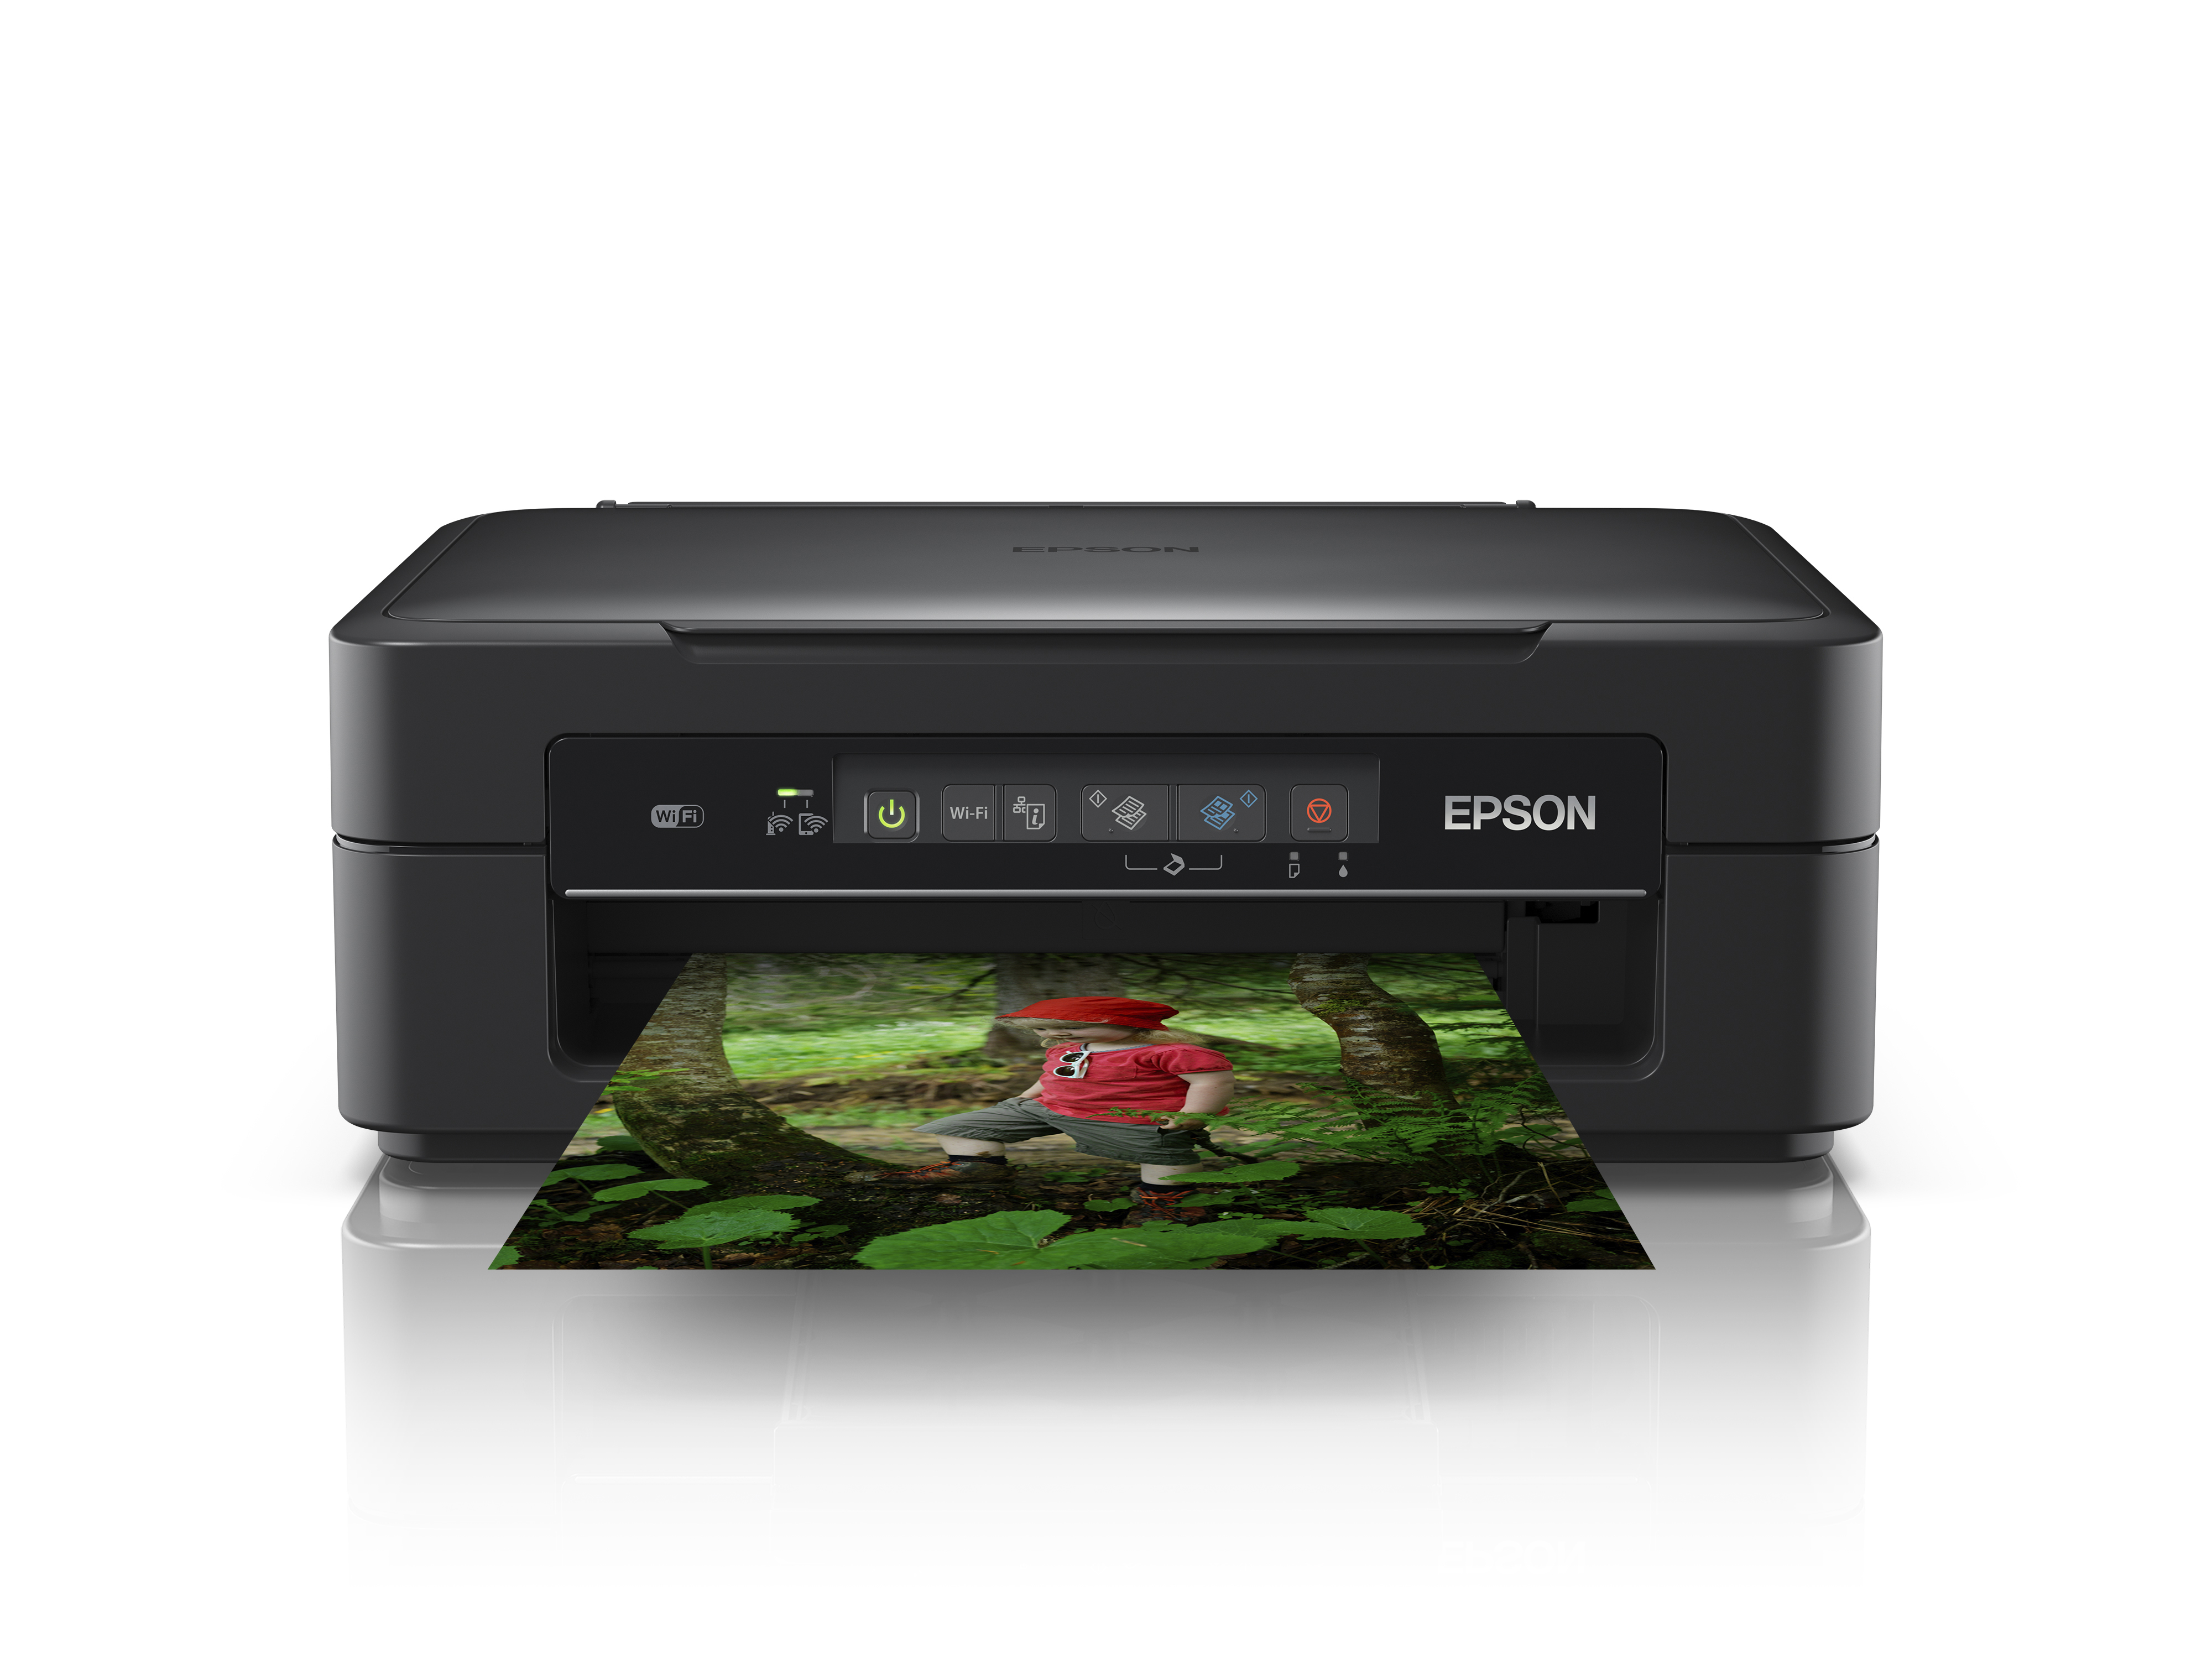  EPSON  XP 255 Imprimante  multifonction Ultra compact Wi  